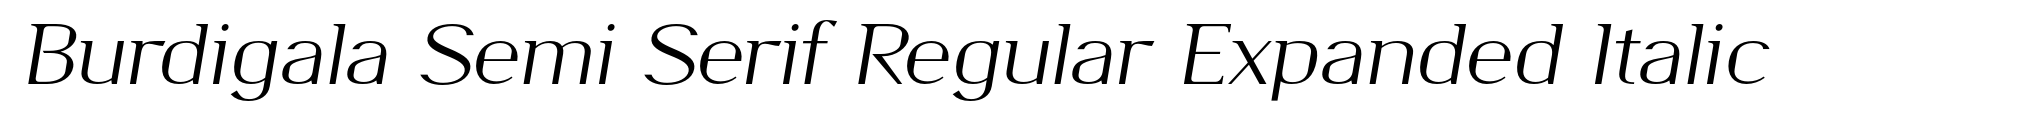 Burdigala Semi Serif Regular Expanded Italic image